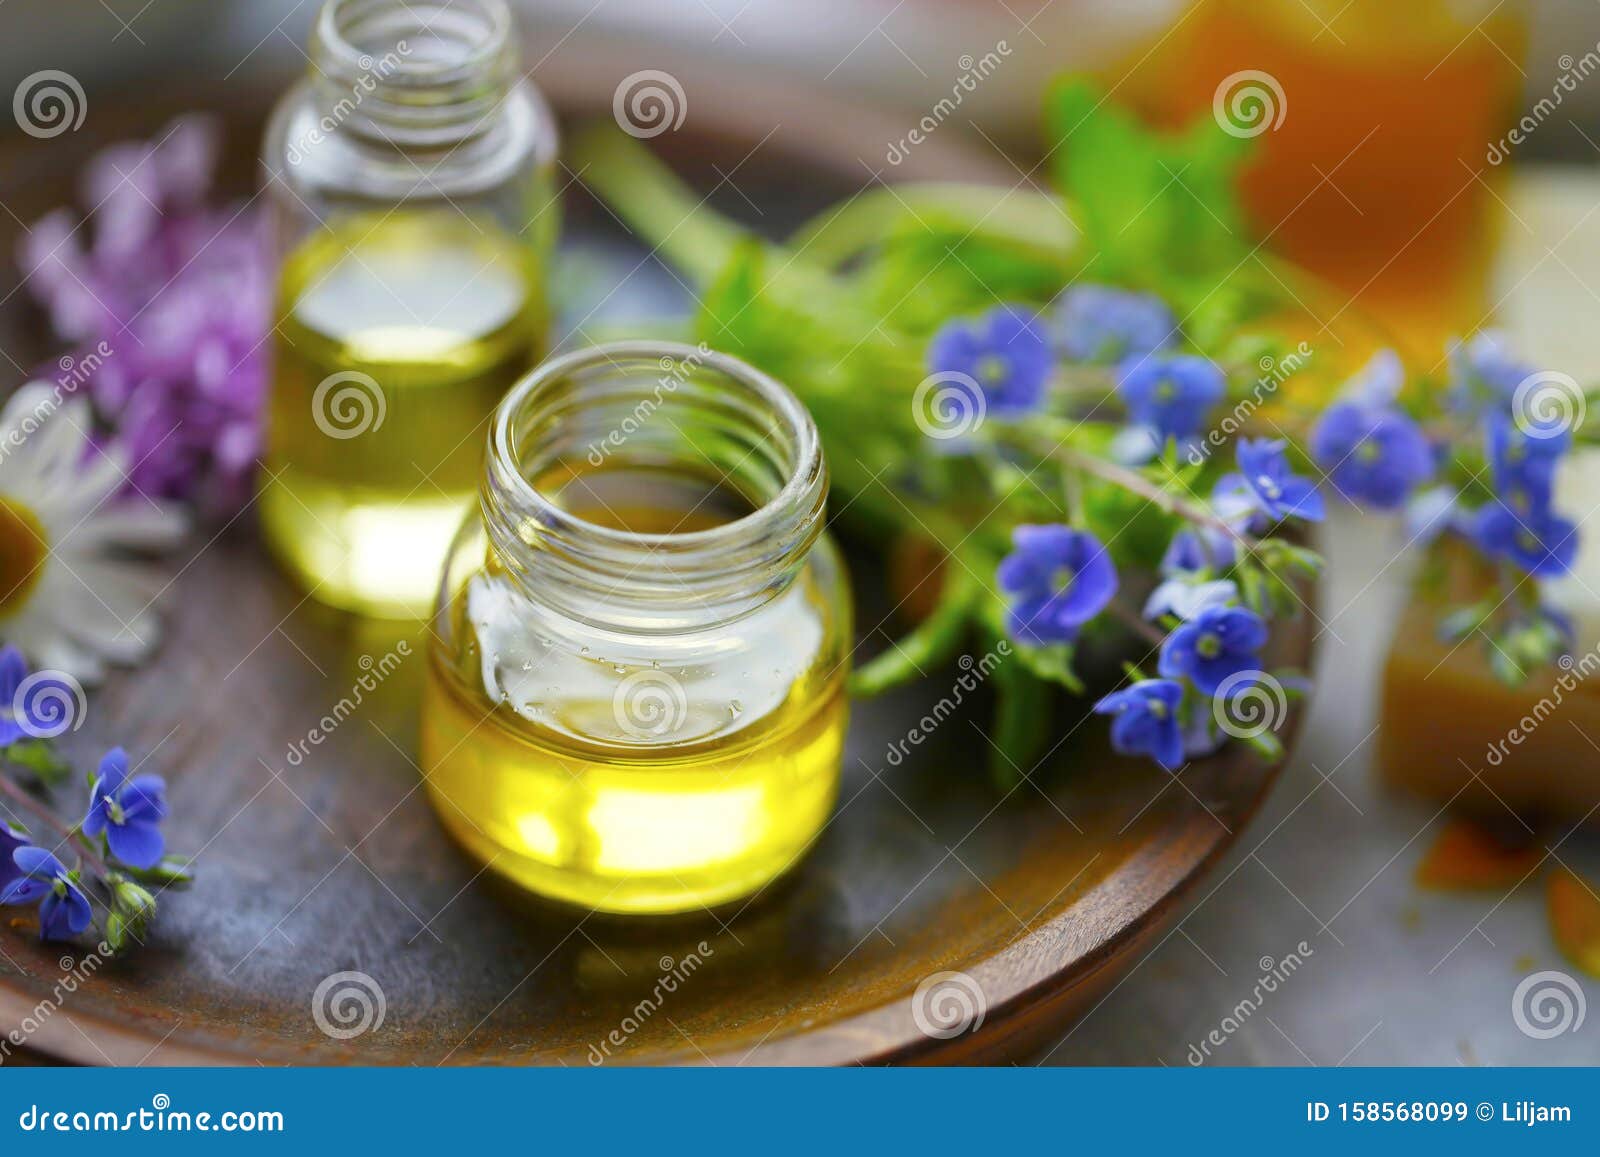 herbal plants oils, alternative herbal medicine, oil bottles